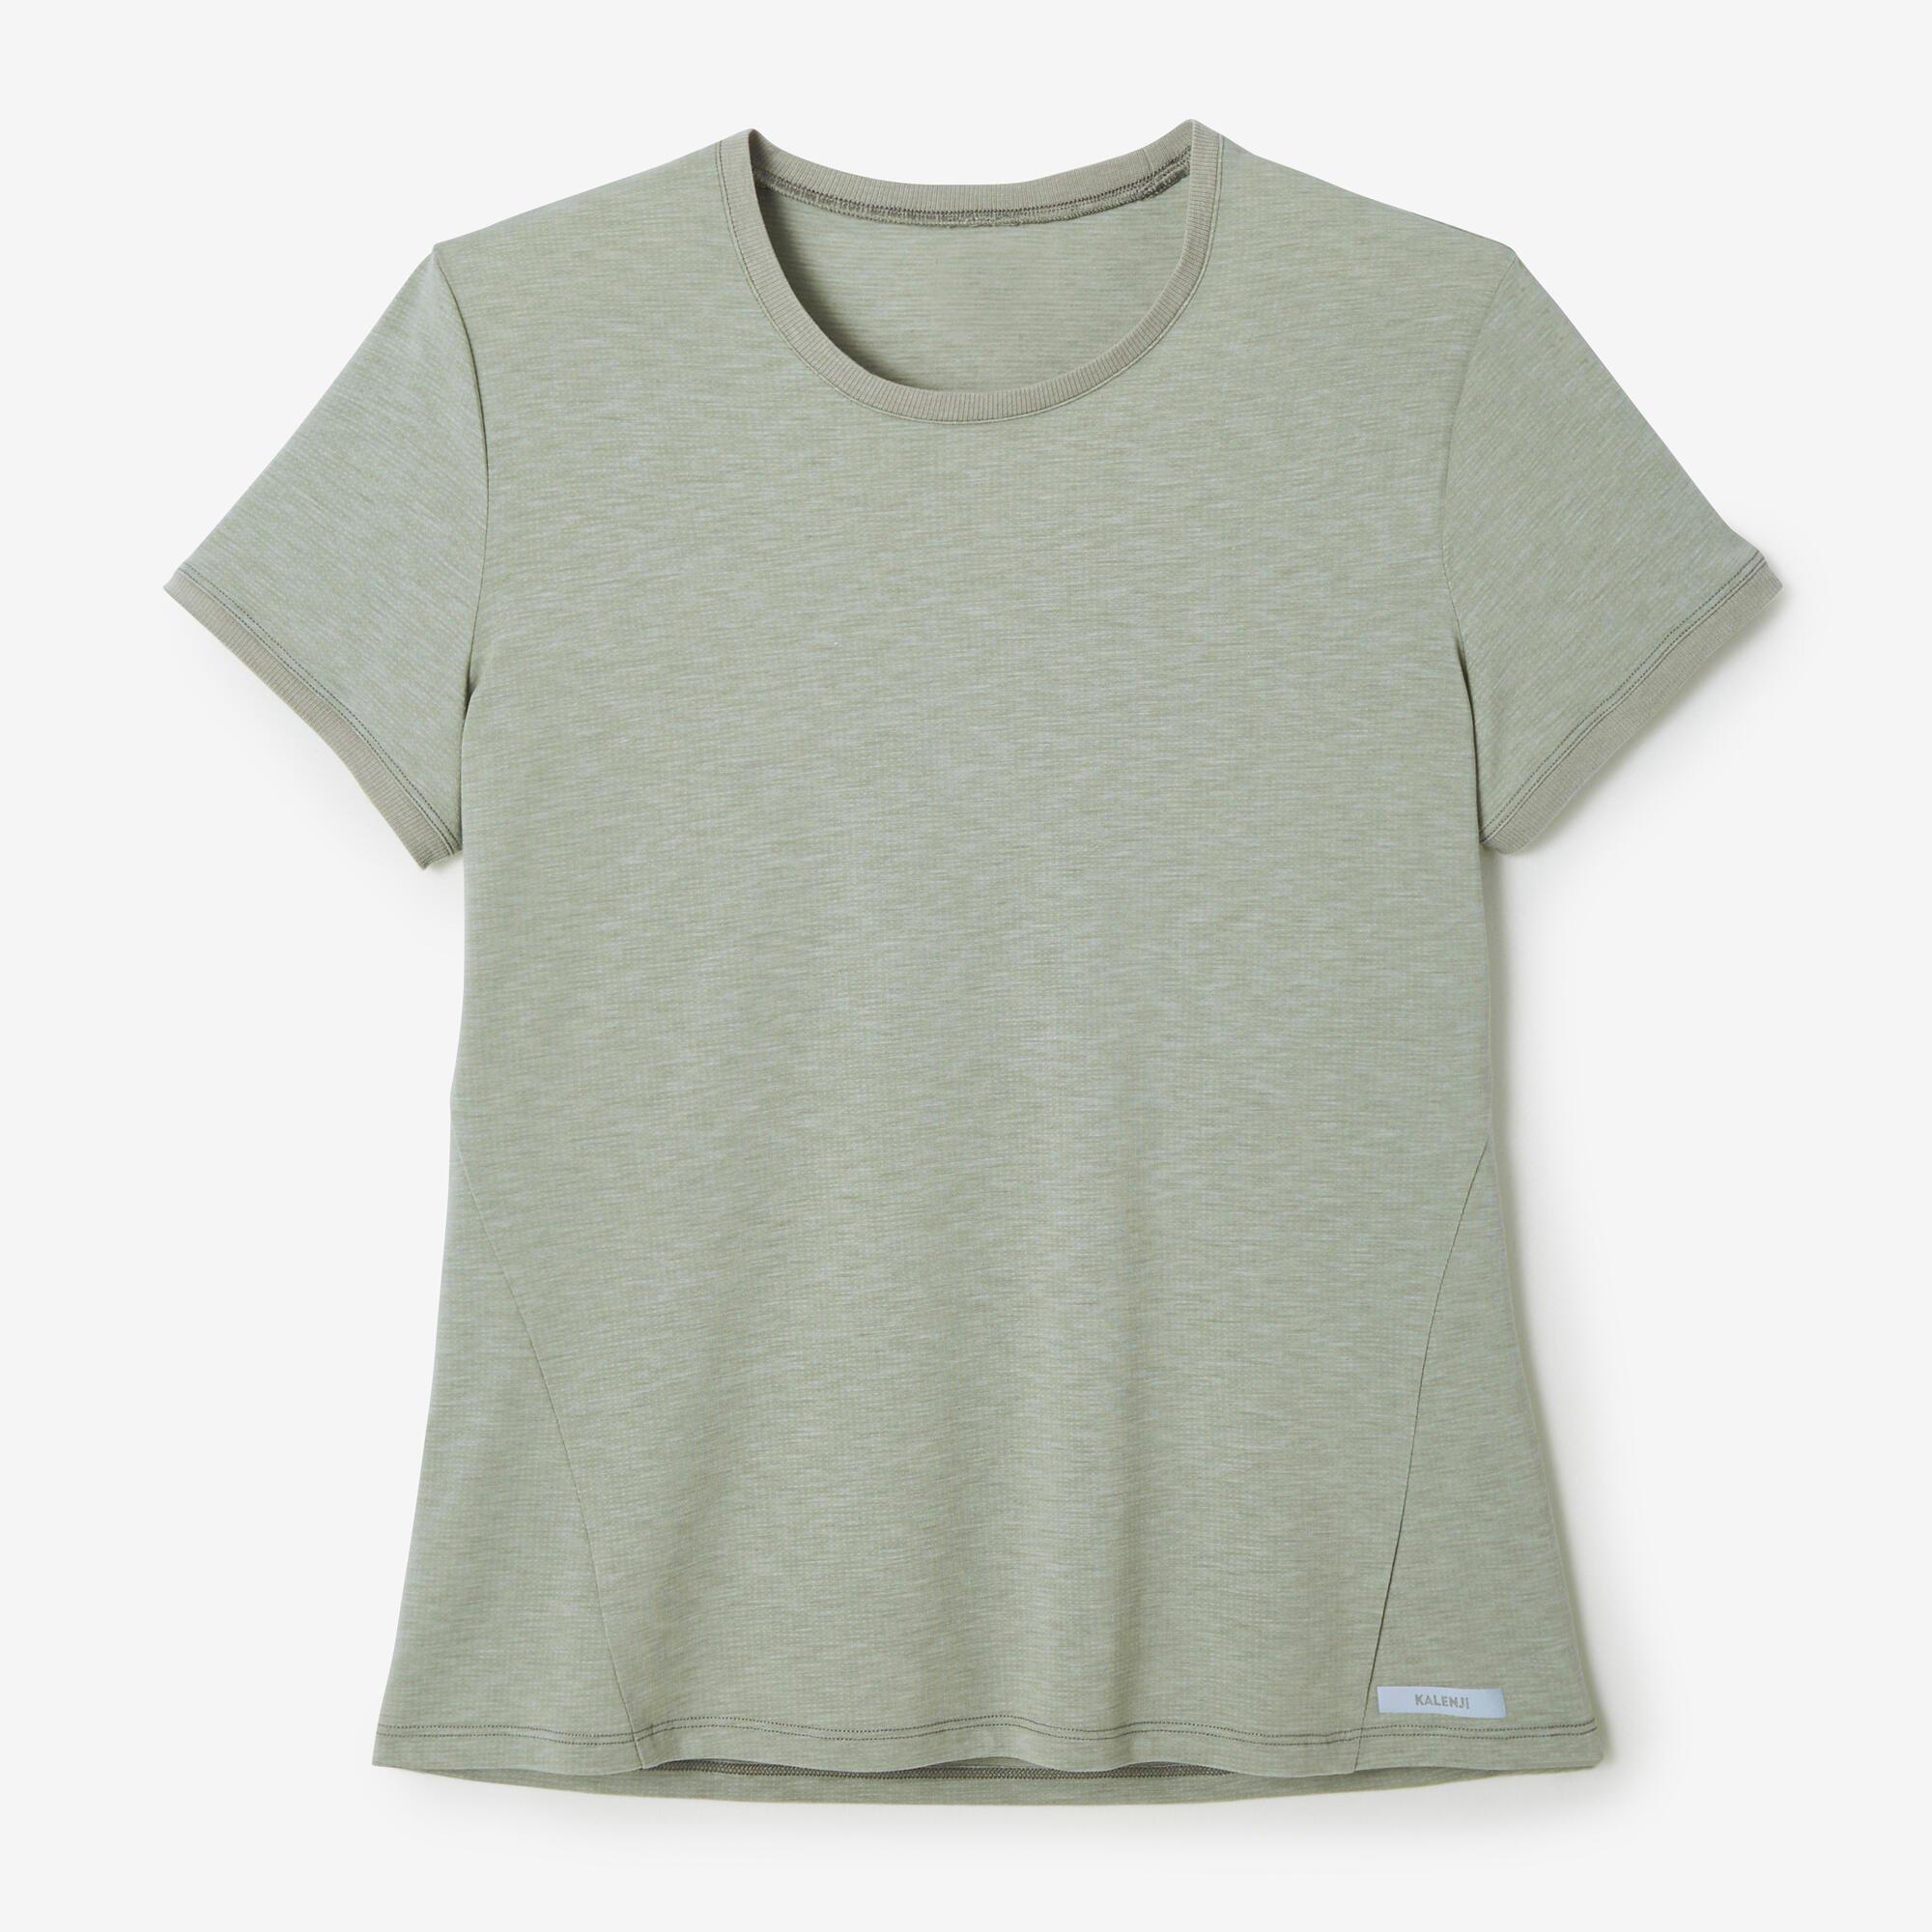 T-Shirts | Decathlon Soft And Breathable Running T-Shirt | Kalenji